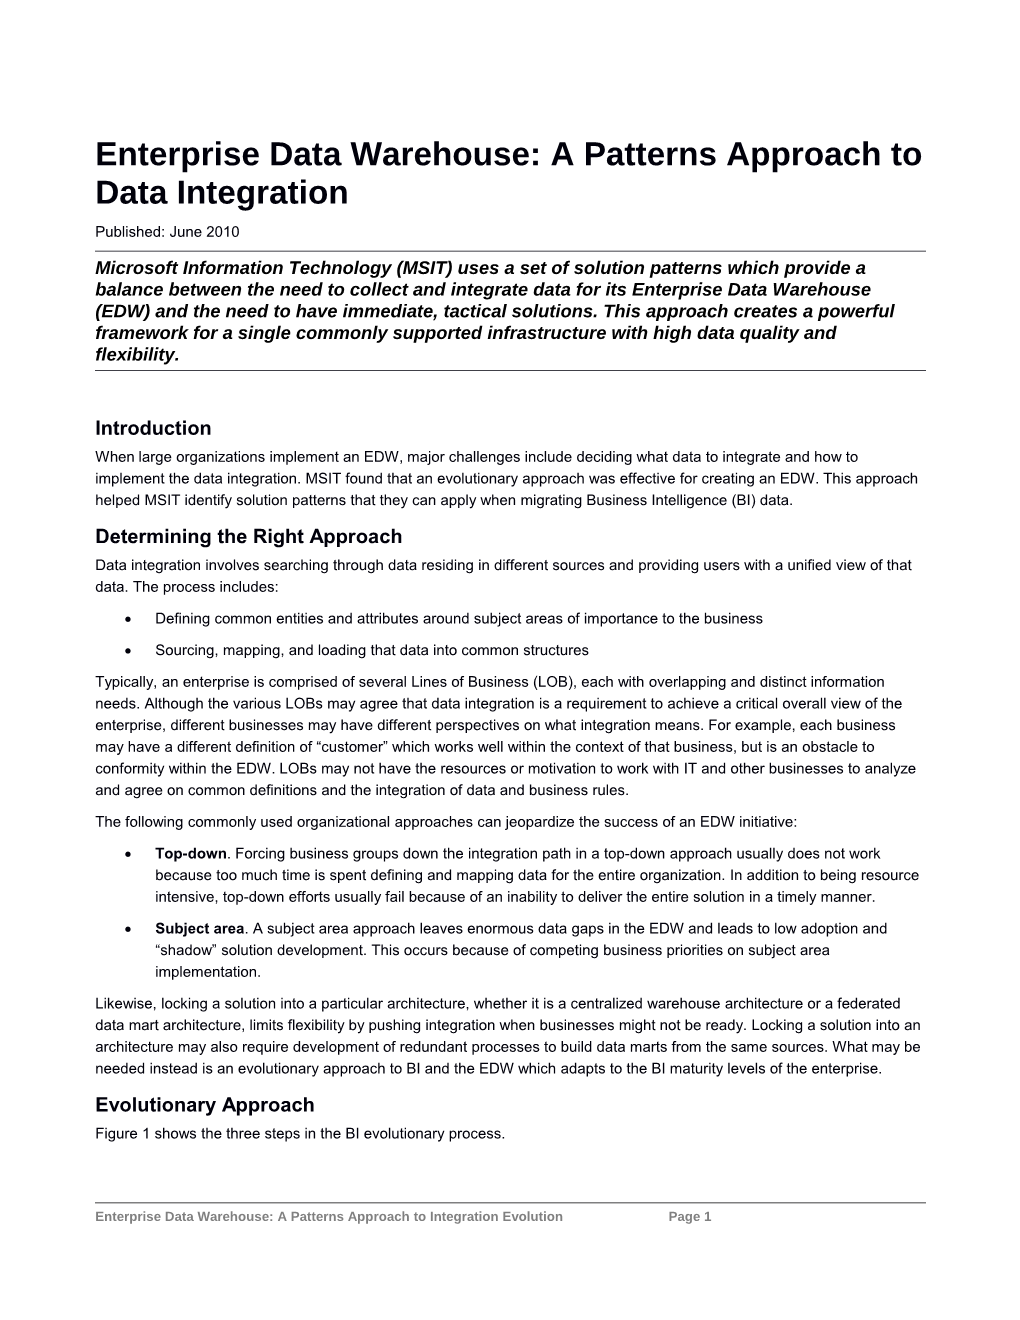 Enterprise Data Warehouse: a Patterns Approach to Data Integration